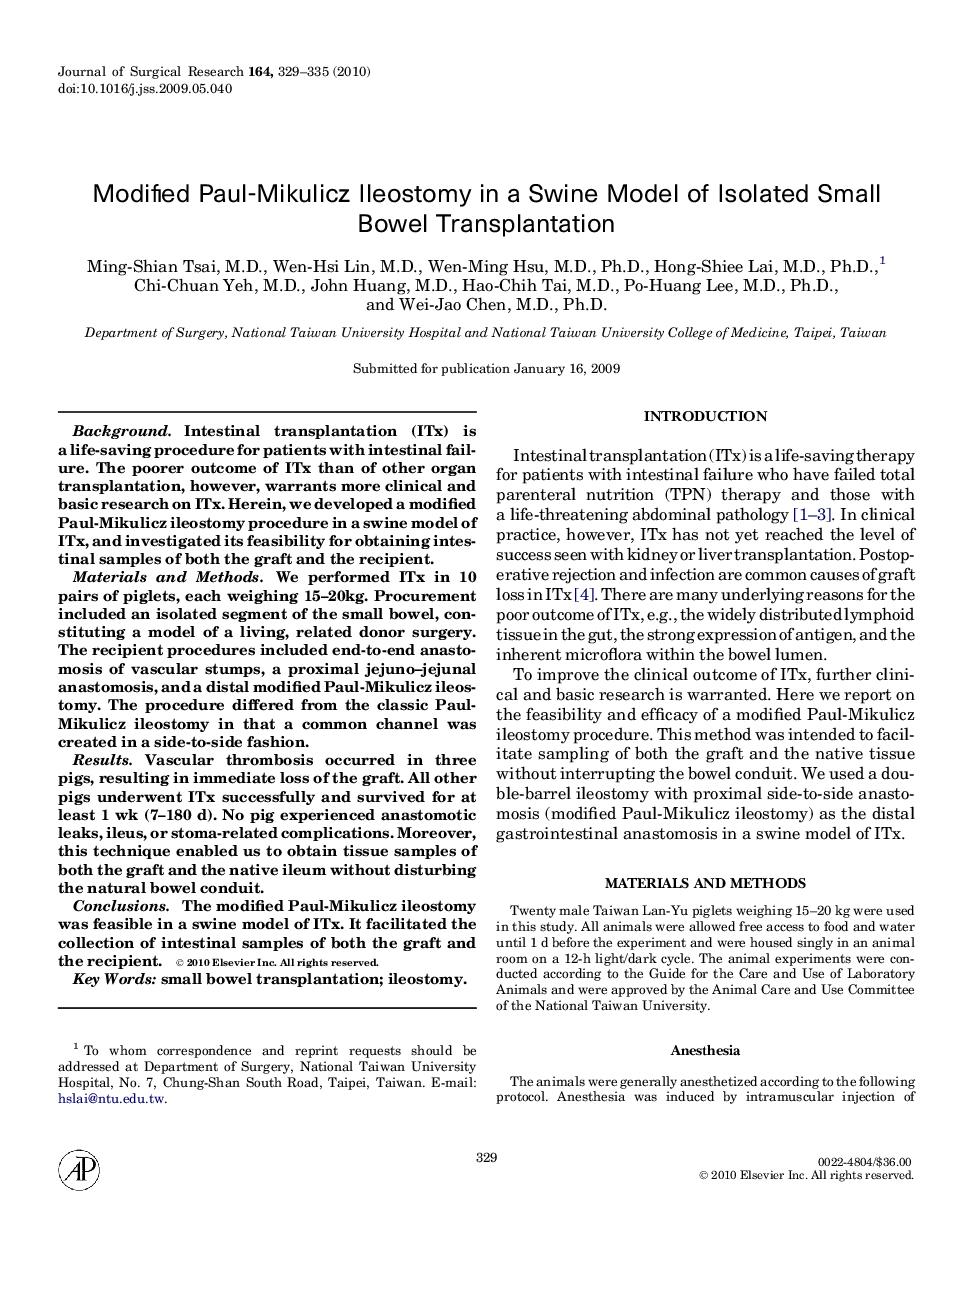 Modified Paul-Mikulicz Ileostomy in a Swine Model of Isolated Small Bowel Transplantation